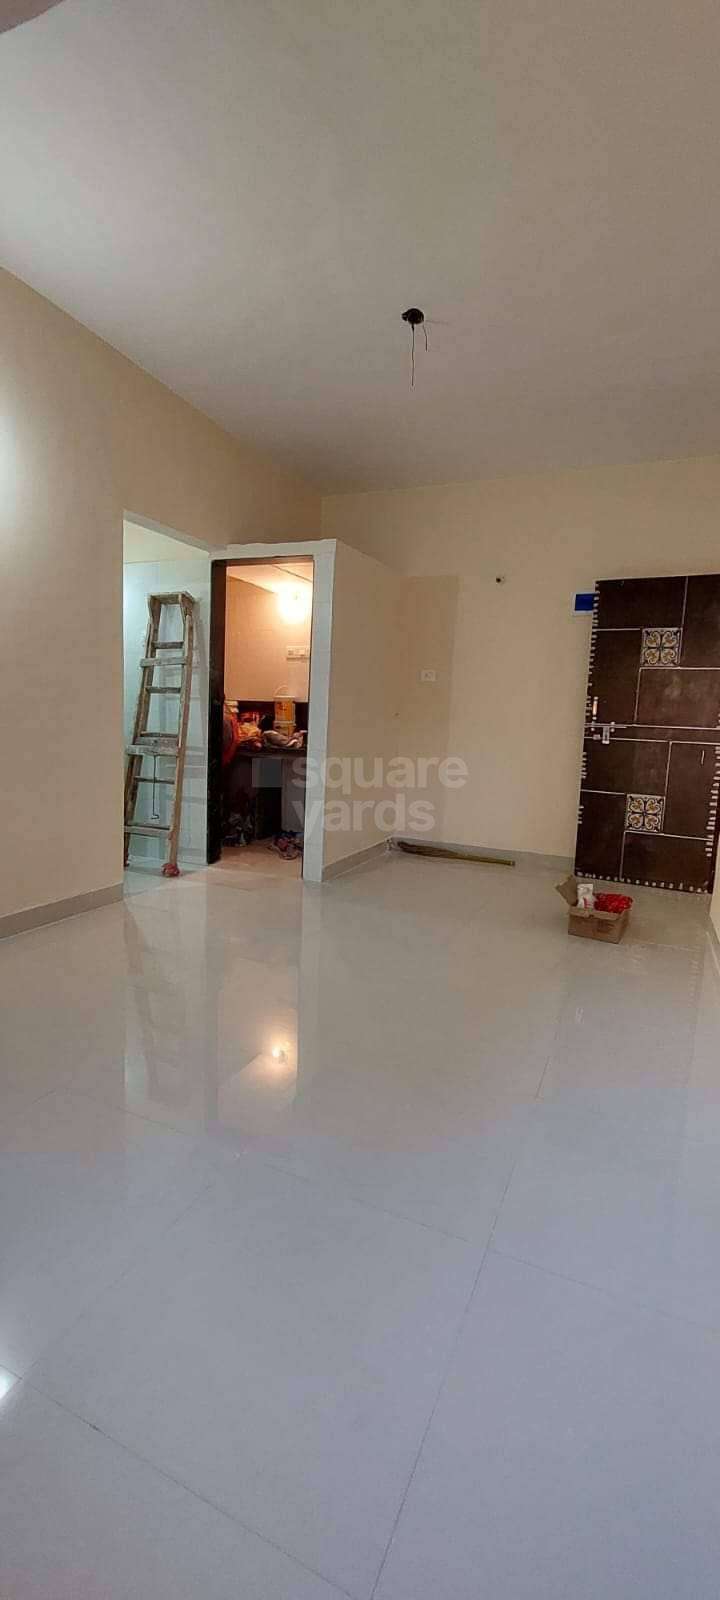 Rental Studio 450 Sq.Ft. Apartment In Sai Raj Heights Kalamboli, Kalamboli  Navi Mumbai - 5148731